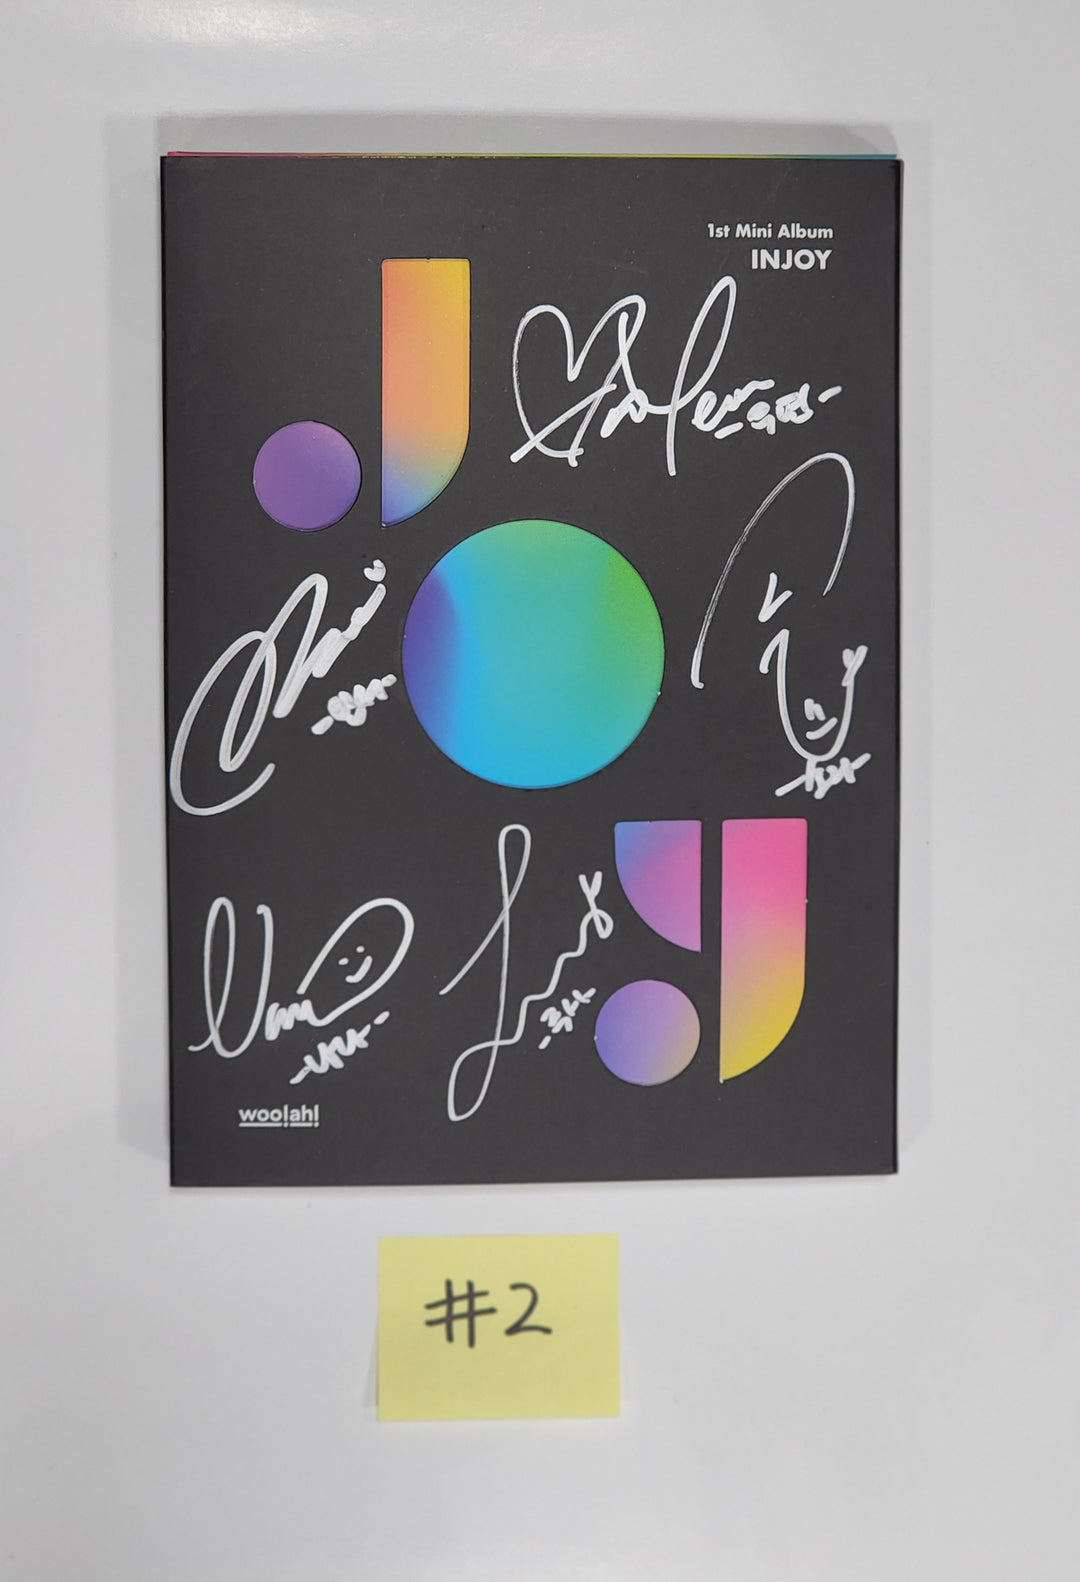 Woo!ah! "JOY" - Hand Autographed(Signed) Promo Album